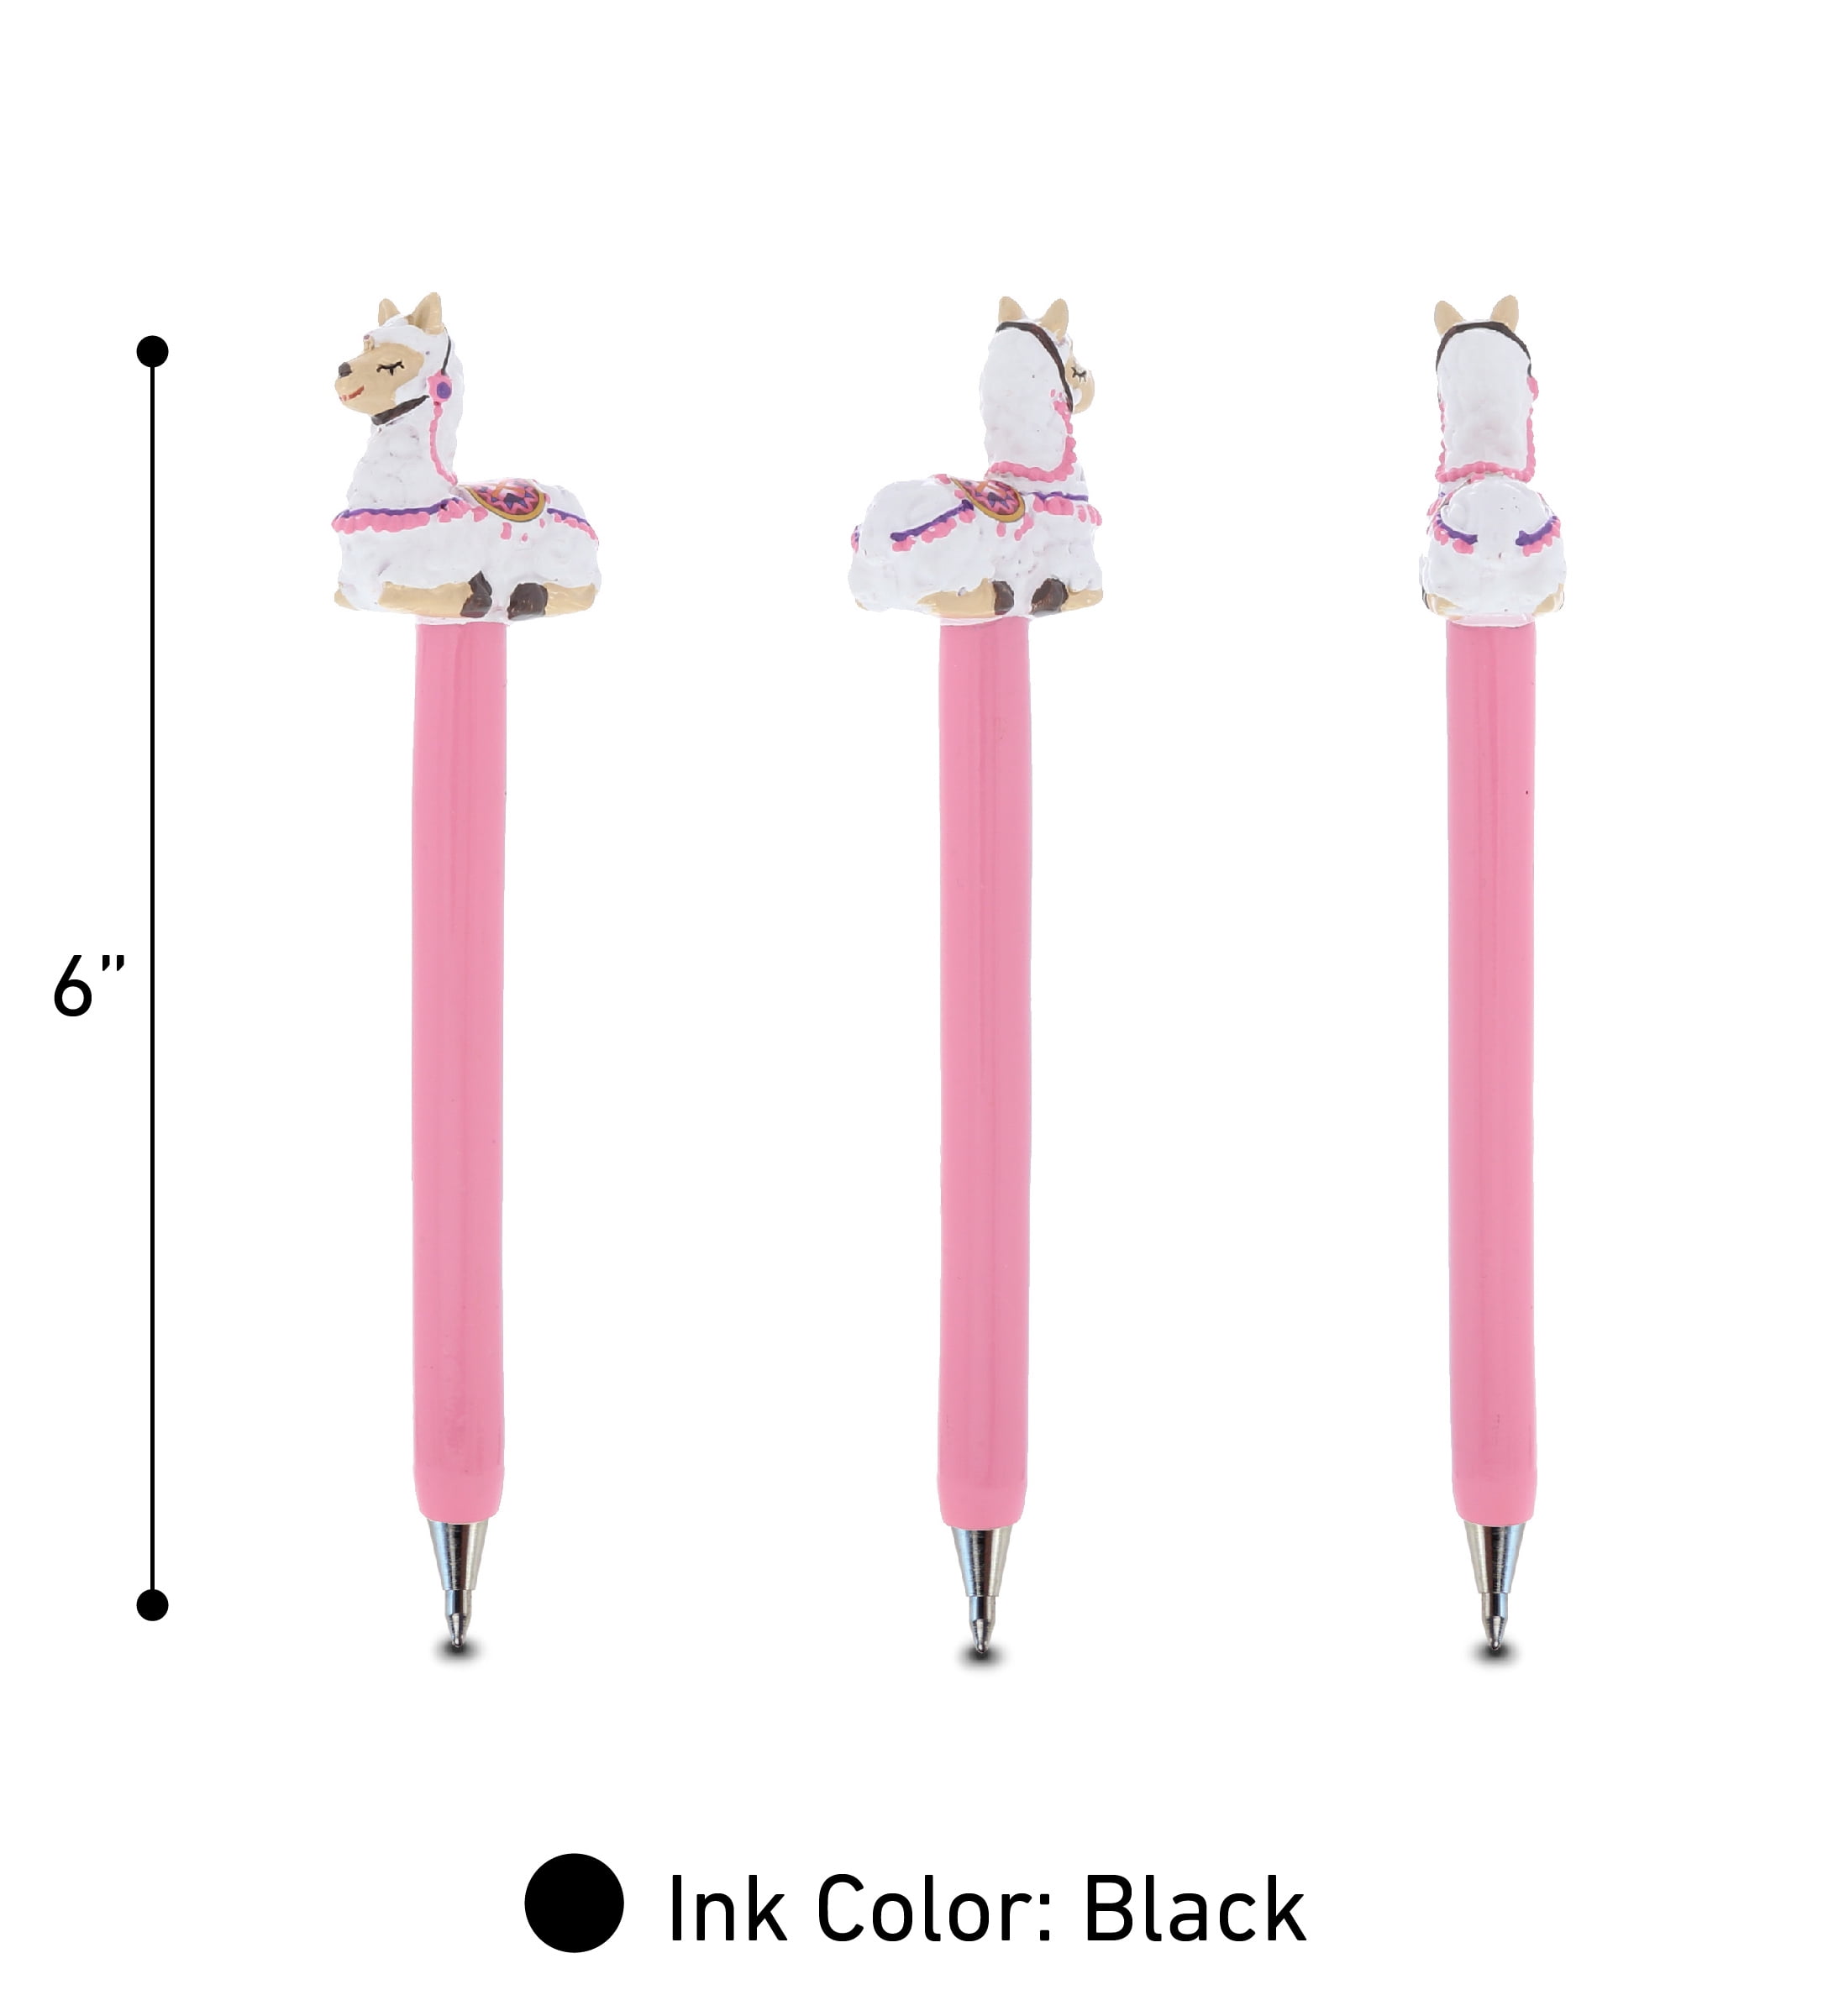 Peru Llama Novelty Pens Pick a Pack Size Low Price Cute Gift Idea